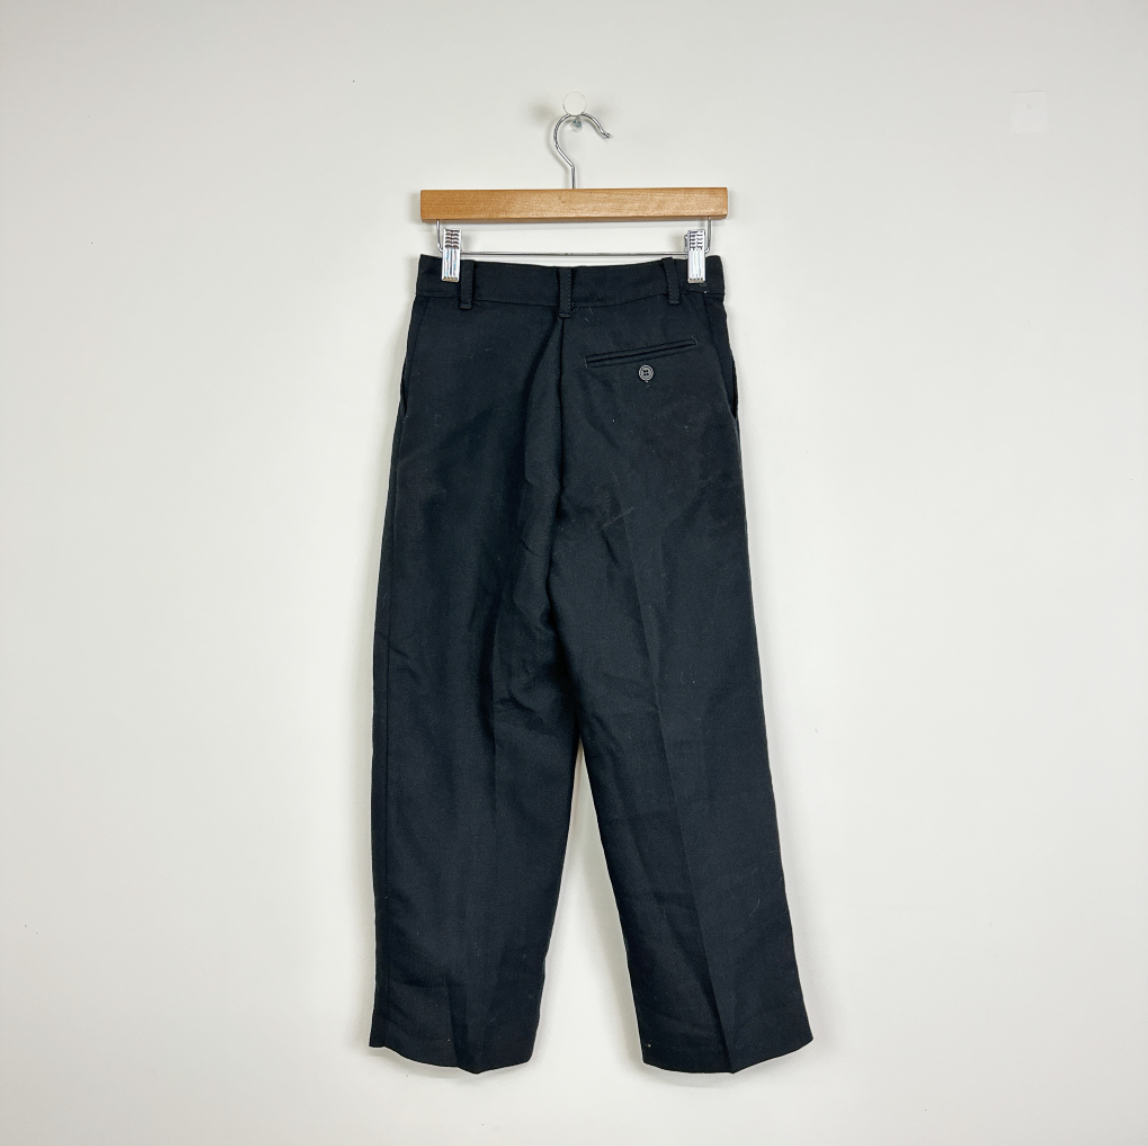 Vintage Kids Pleated Trousers - 10yr